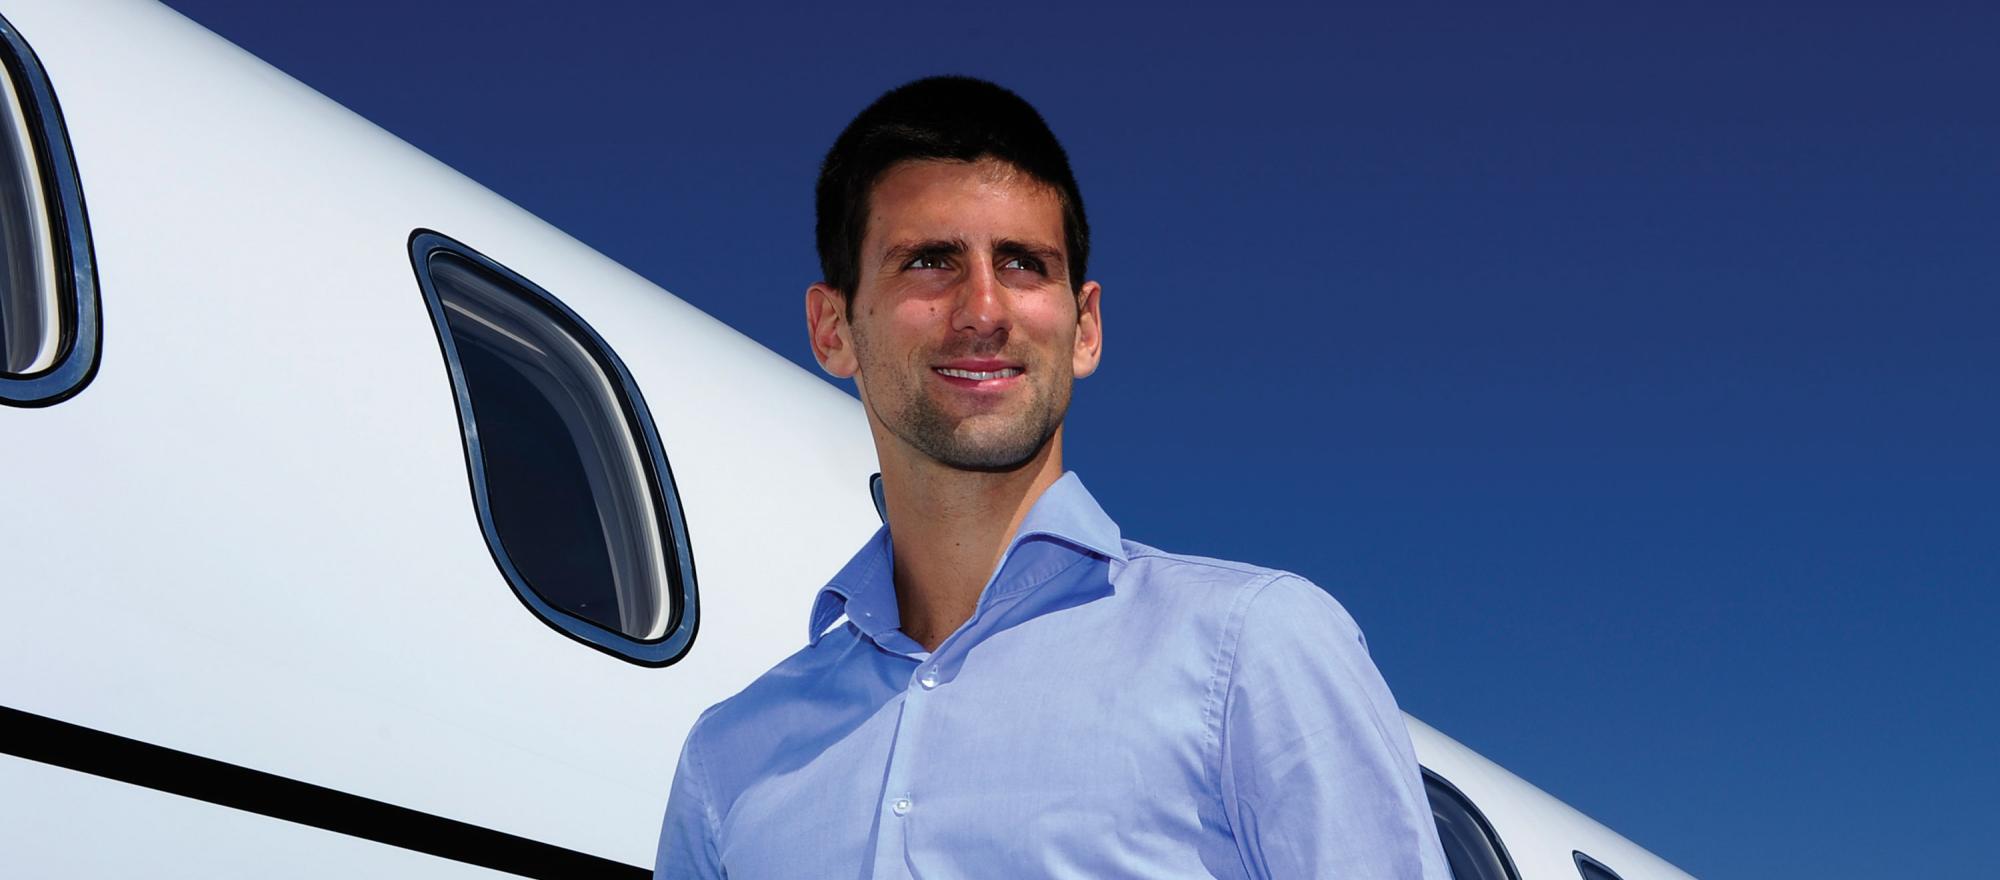 Tennis champion Novak Djokovic